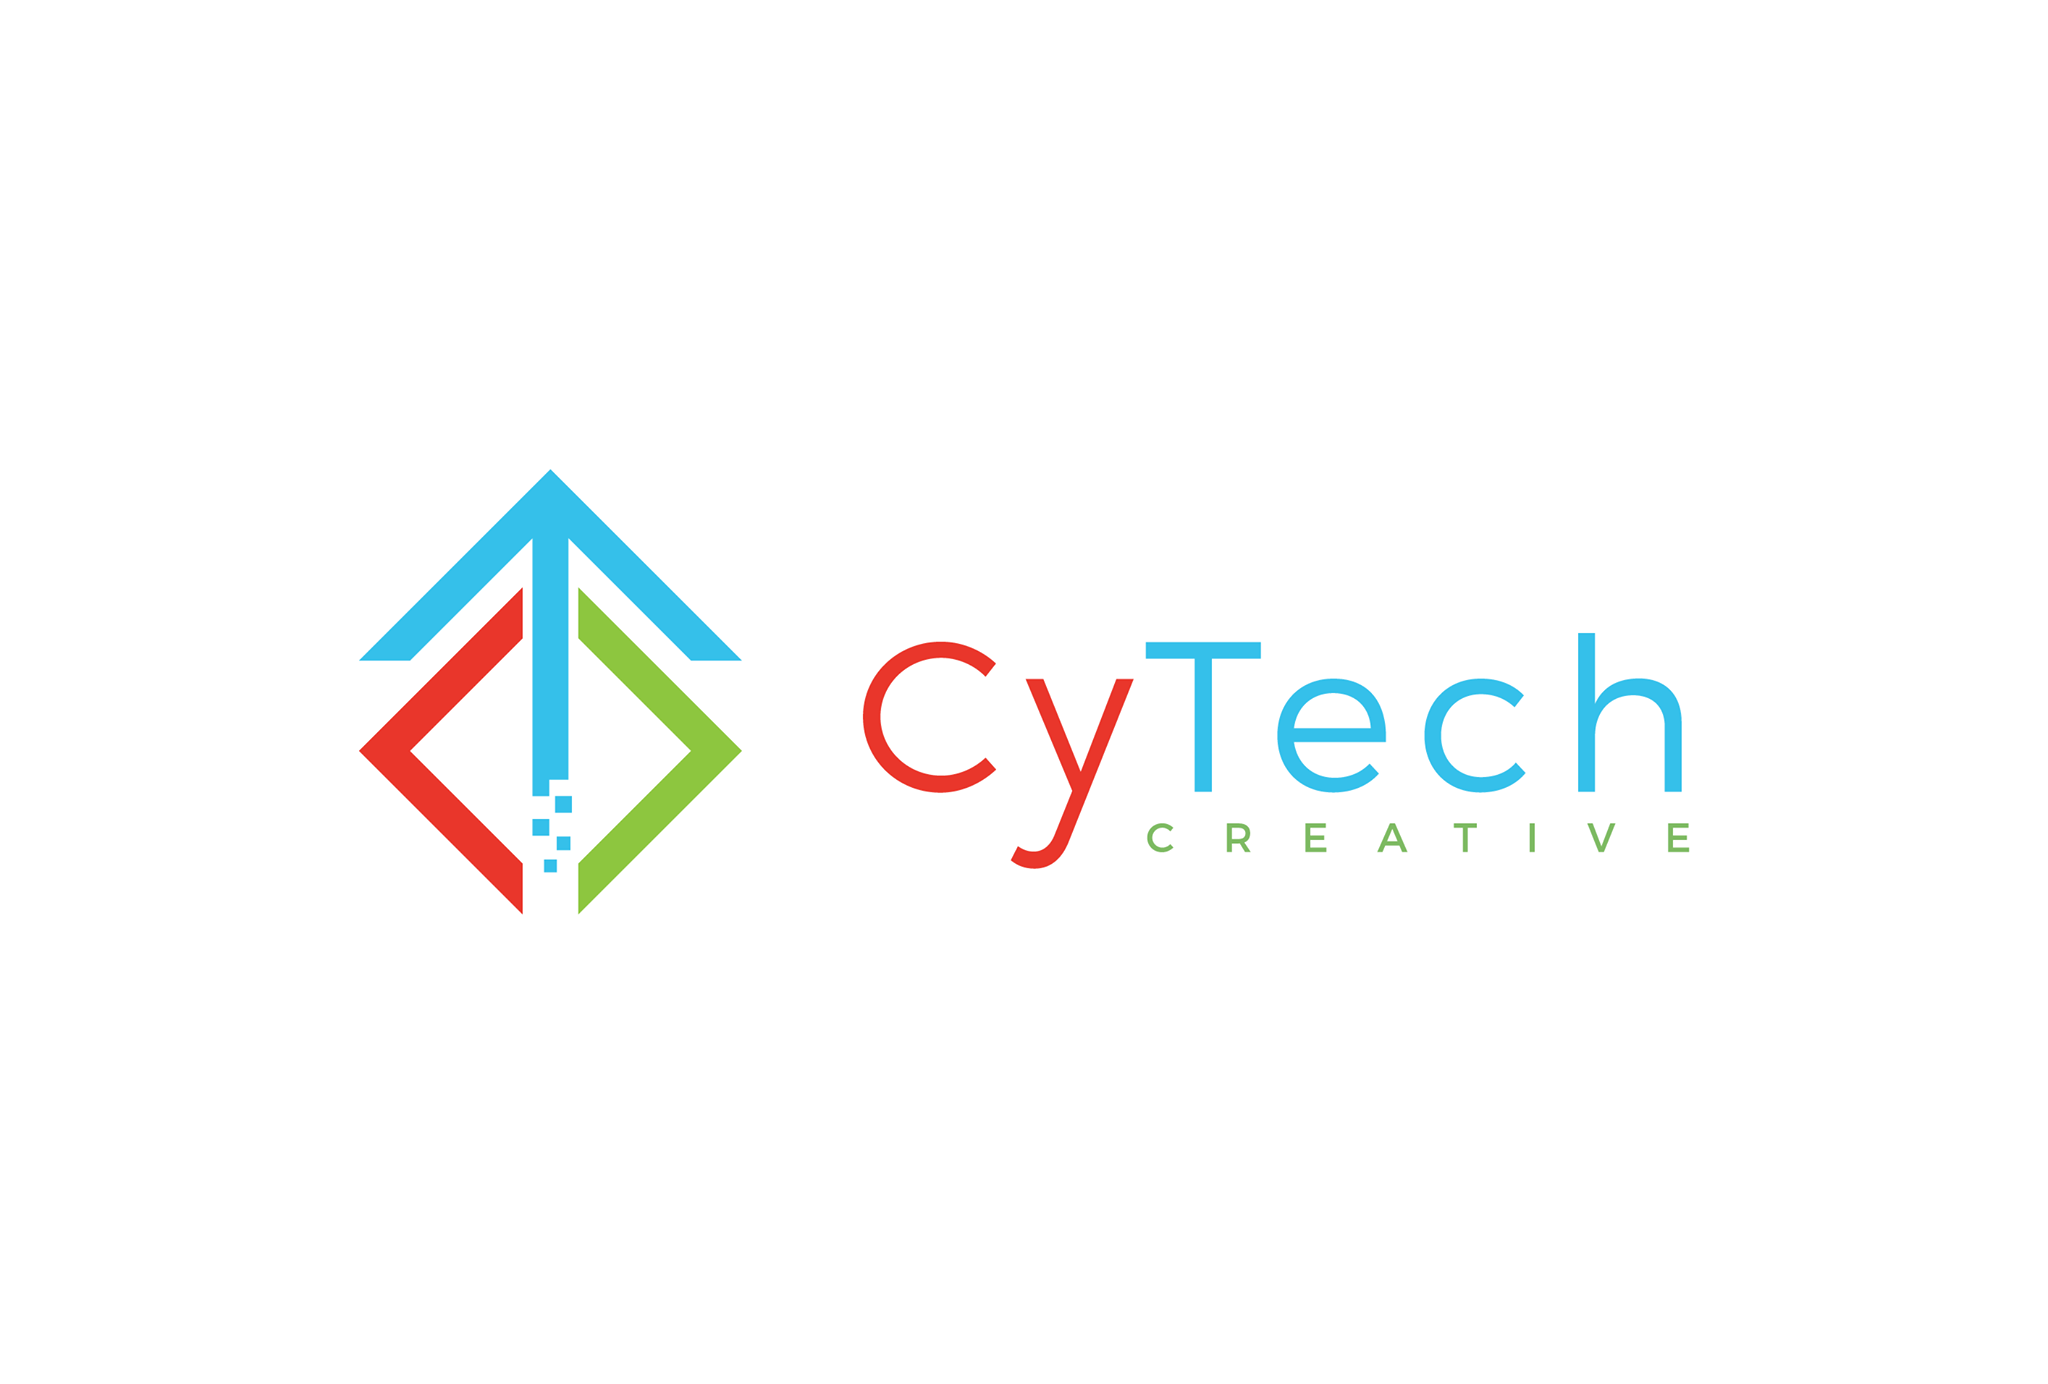 Cytech Creative